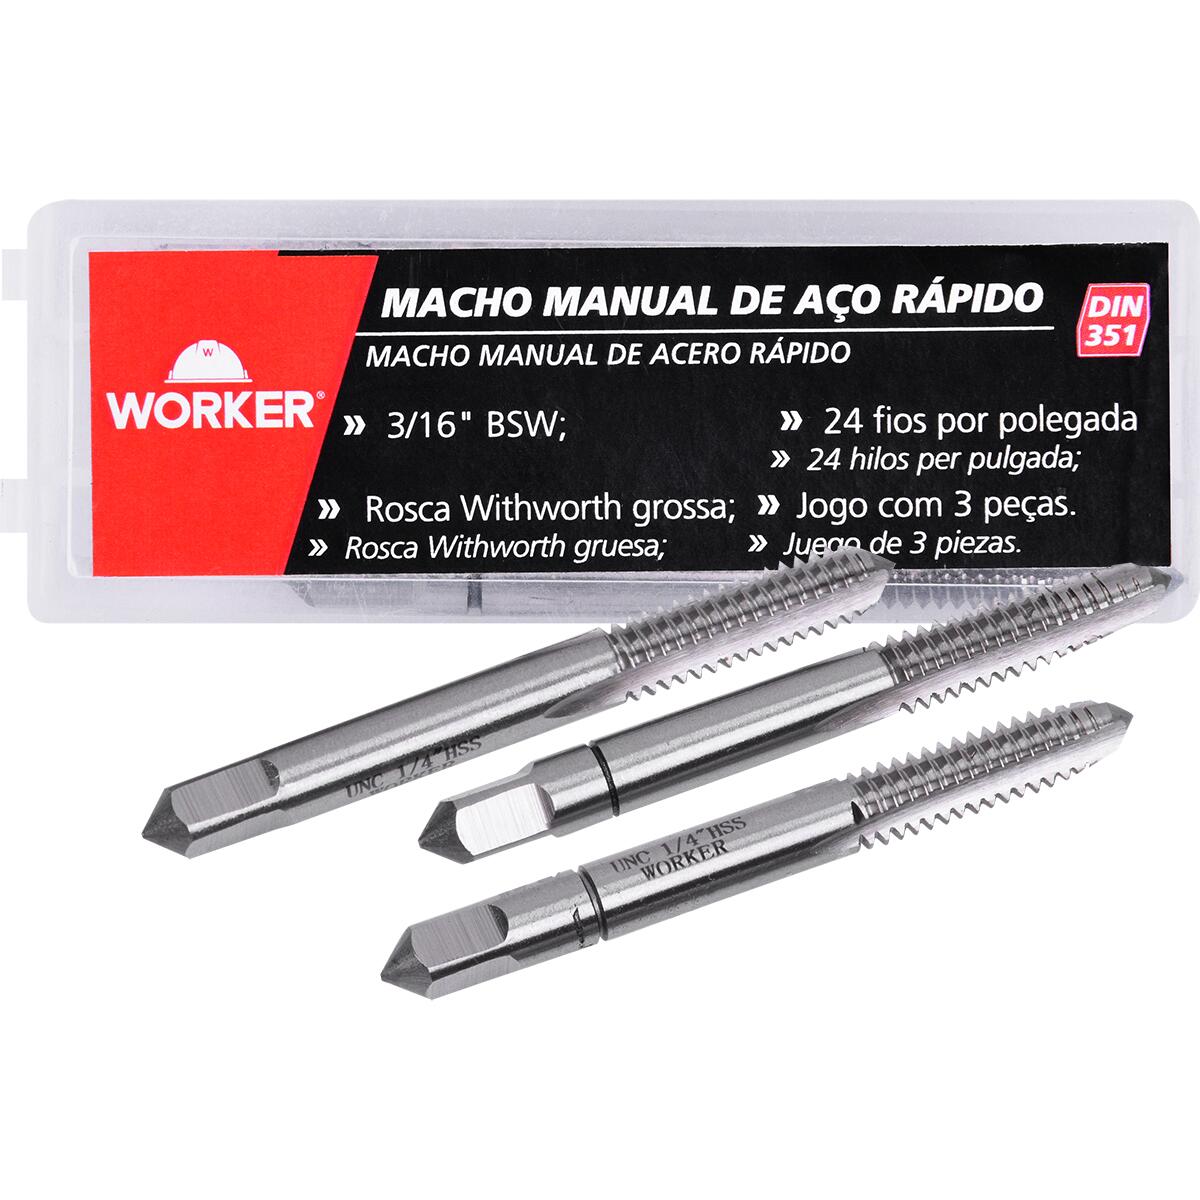 Jogo de Macho Manual Din351 Bsw 3/16"x24" 3 Peças Worker